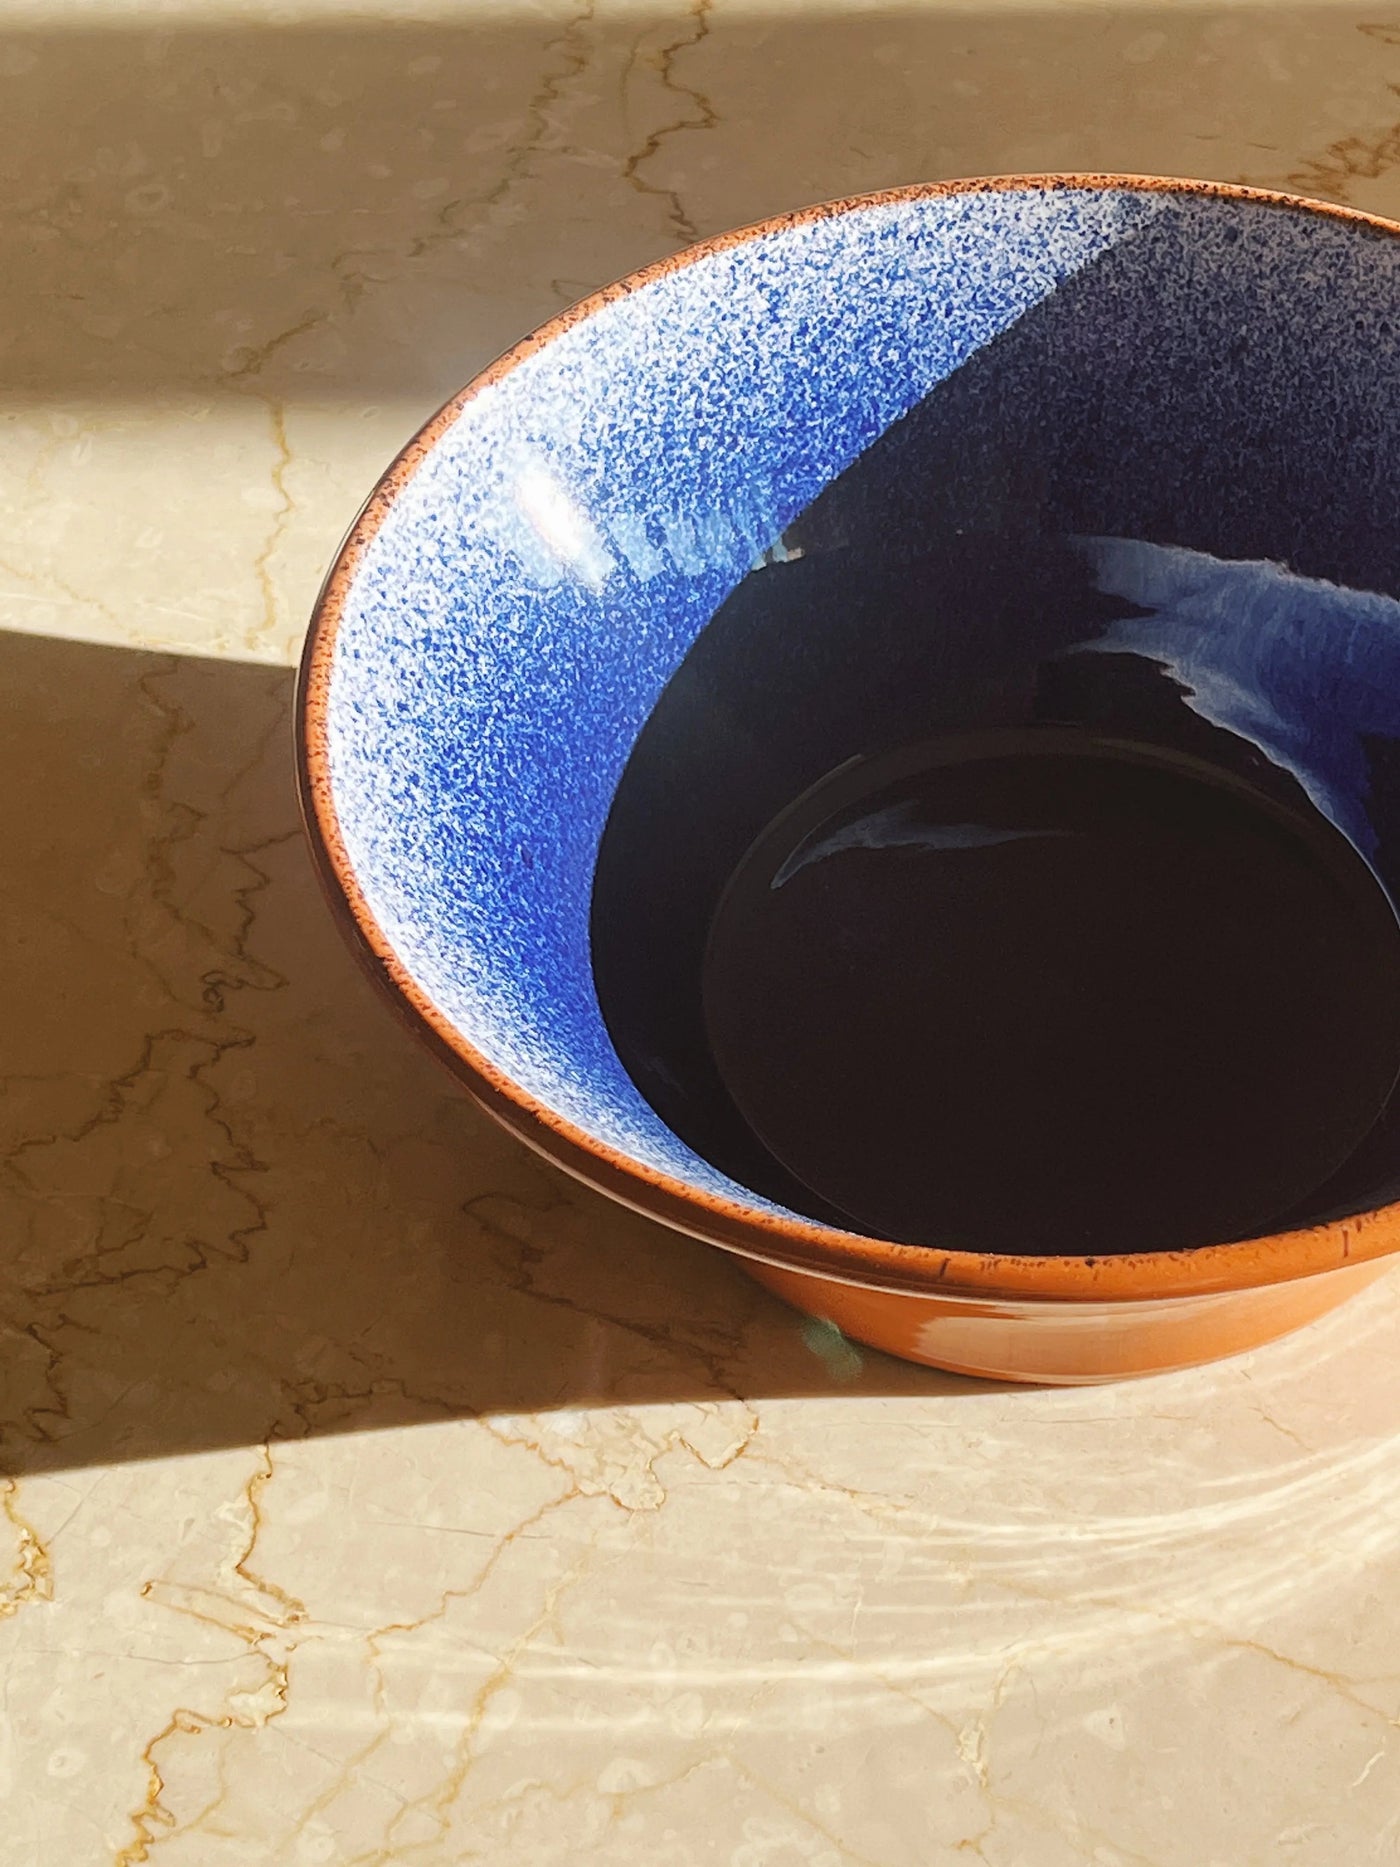 Håndlavet terracotta skål med blå og hvid splash/spray Casa Cubista